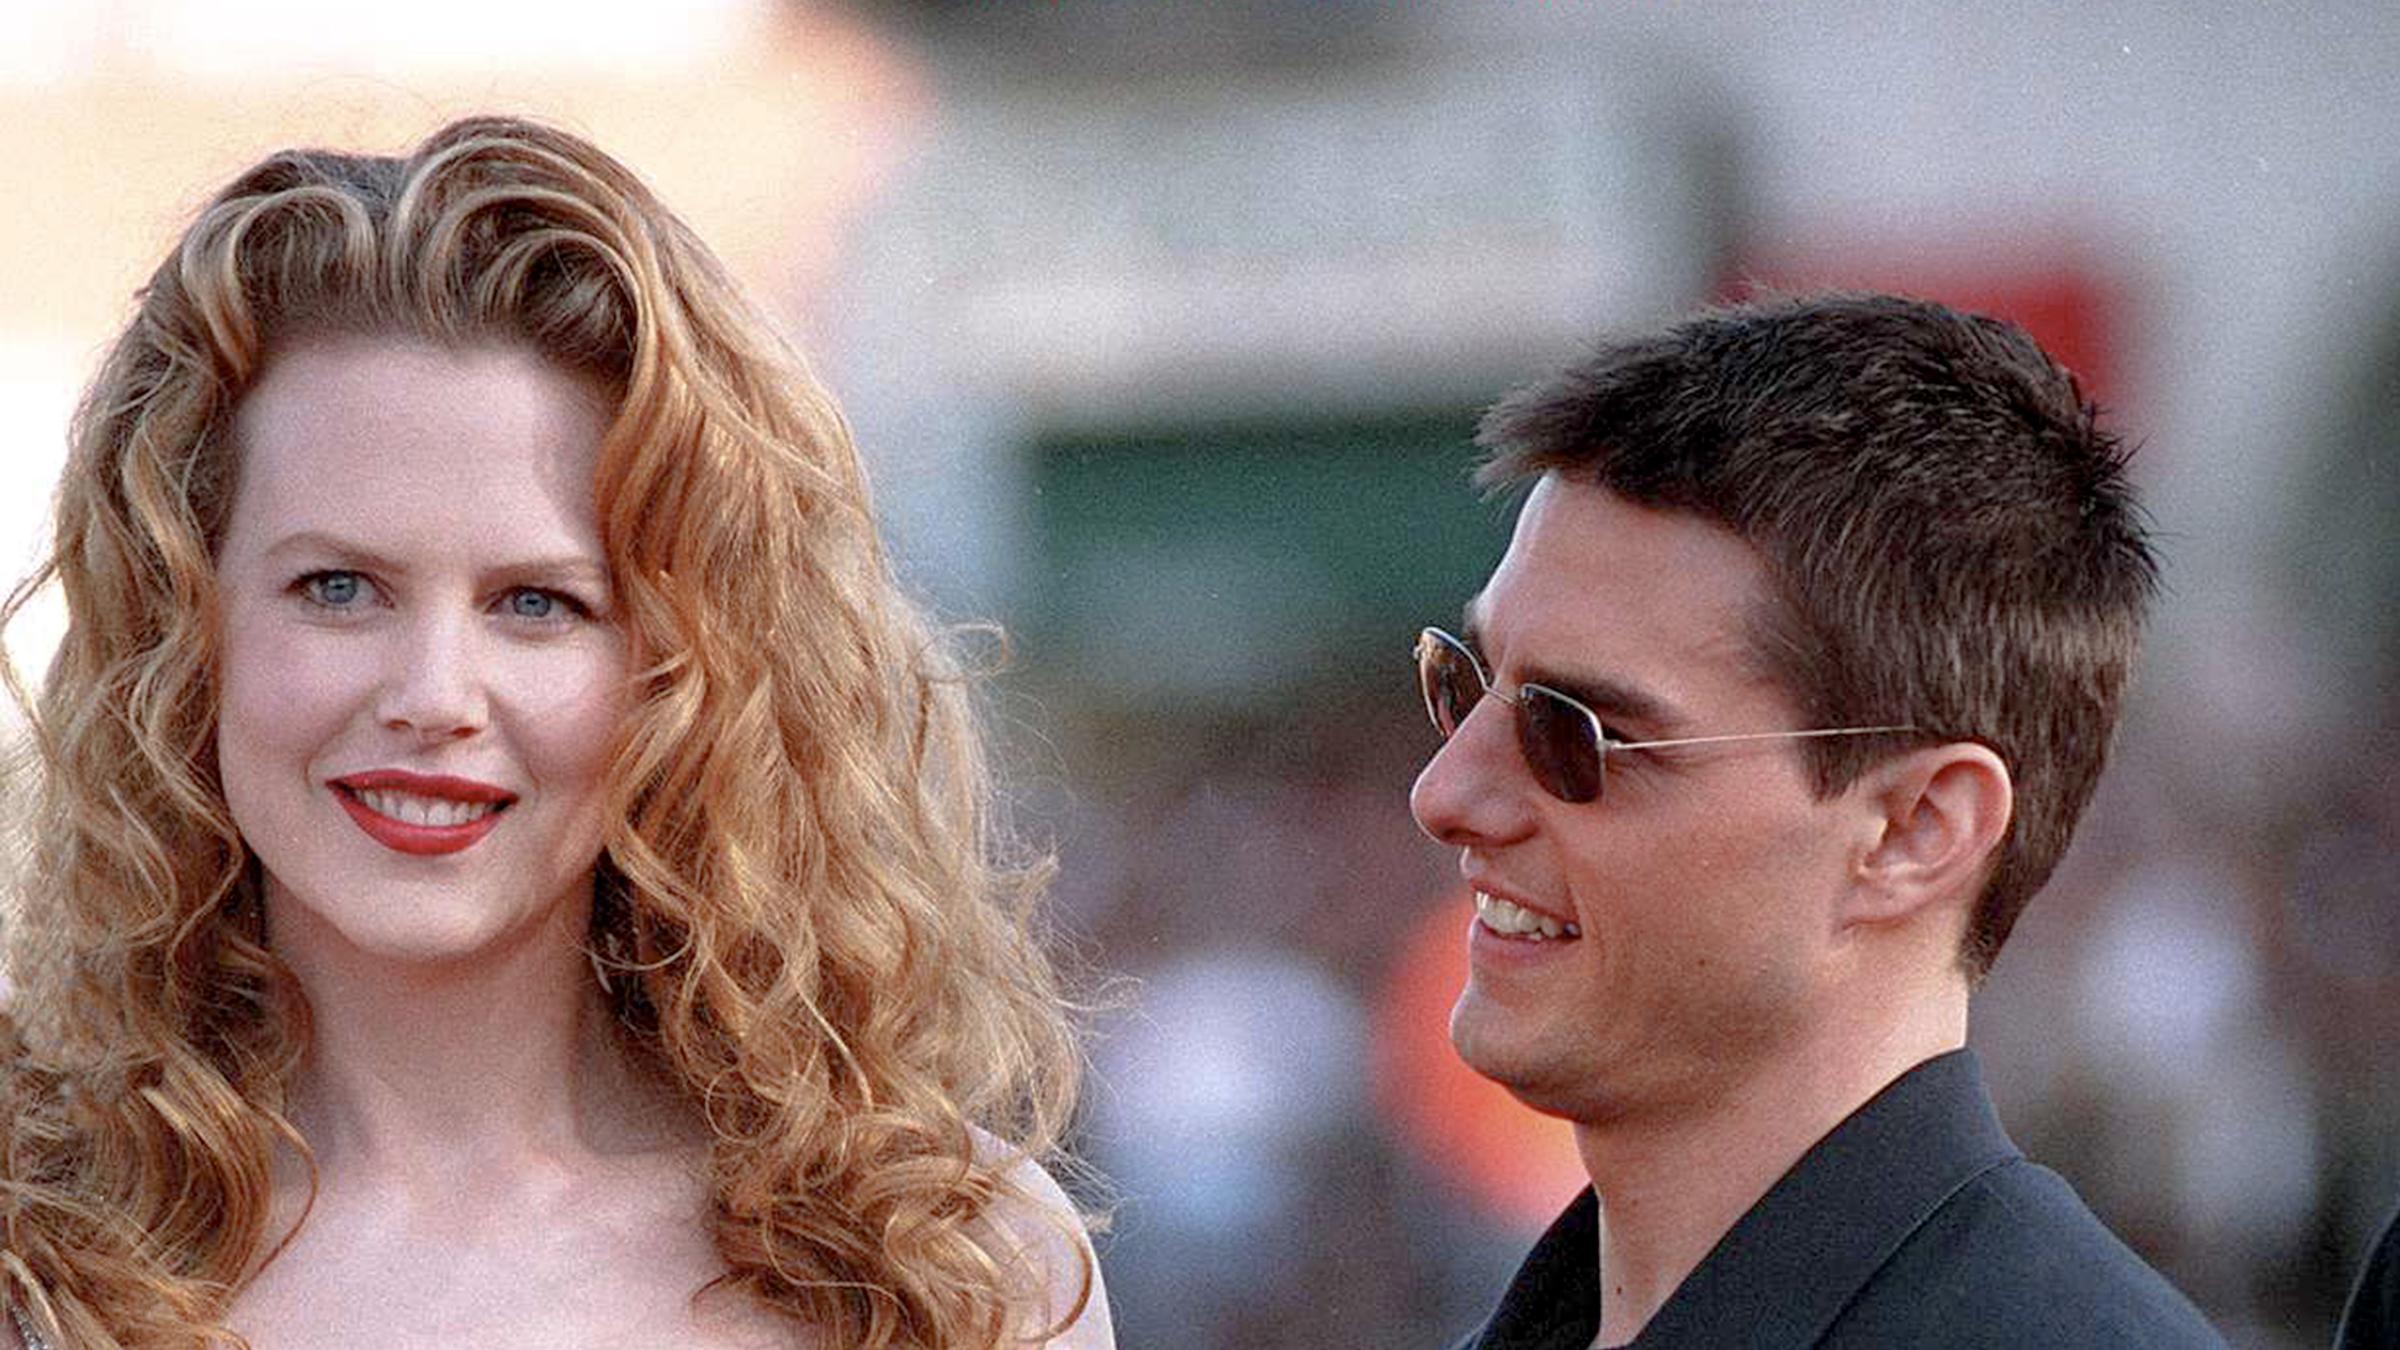 Tom Cruise had Nicole Kidman's phone tapped according to Documentary